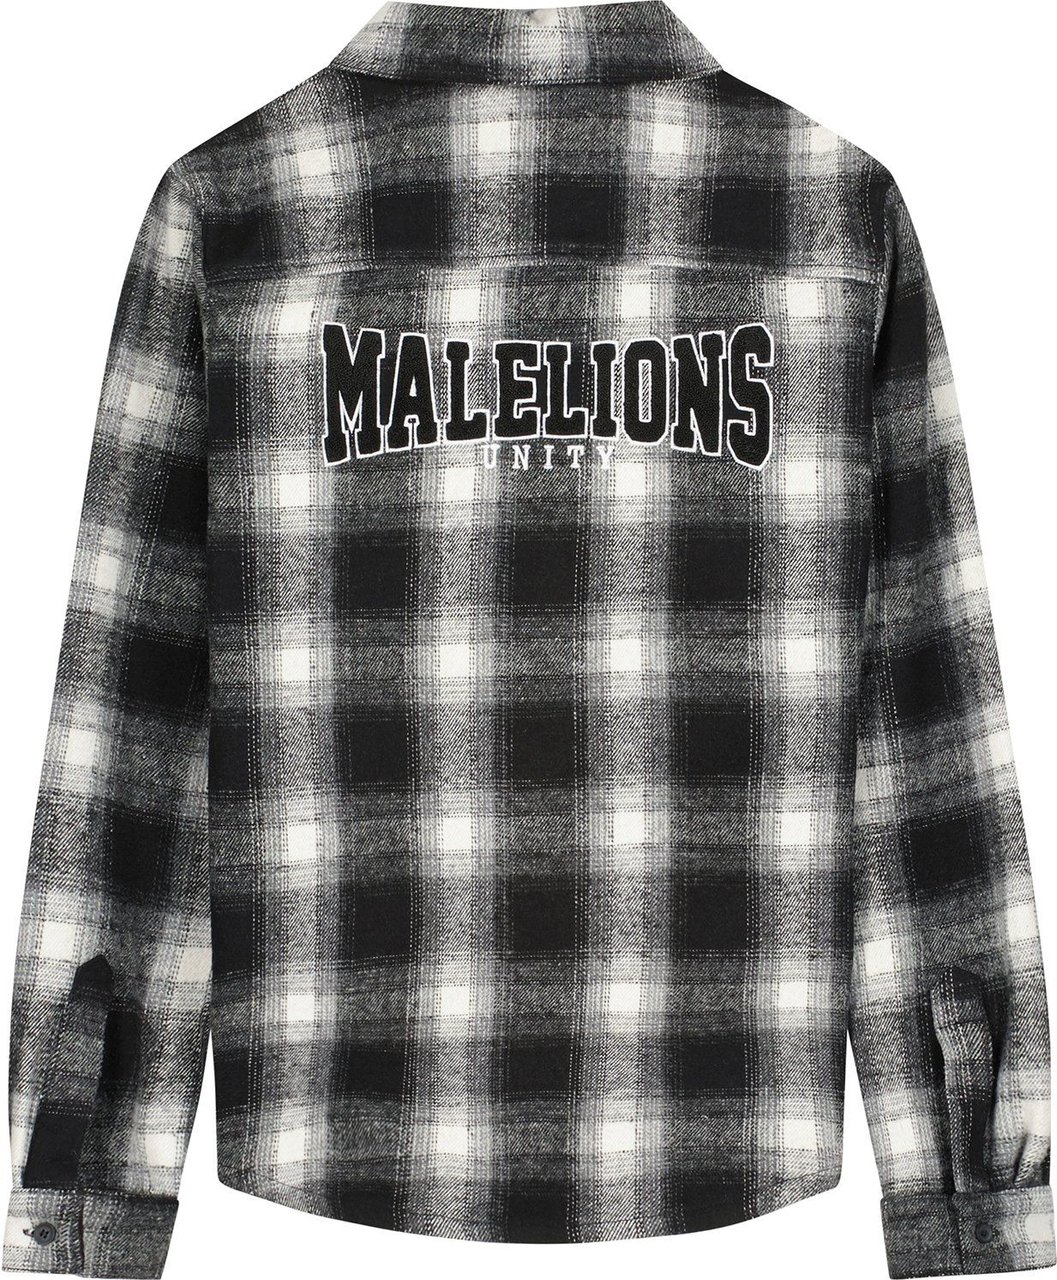 Malelions Unity Flannel - Black/Cream Zwart